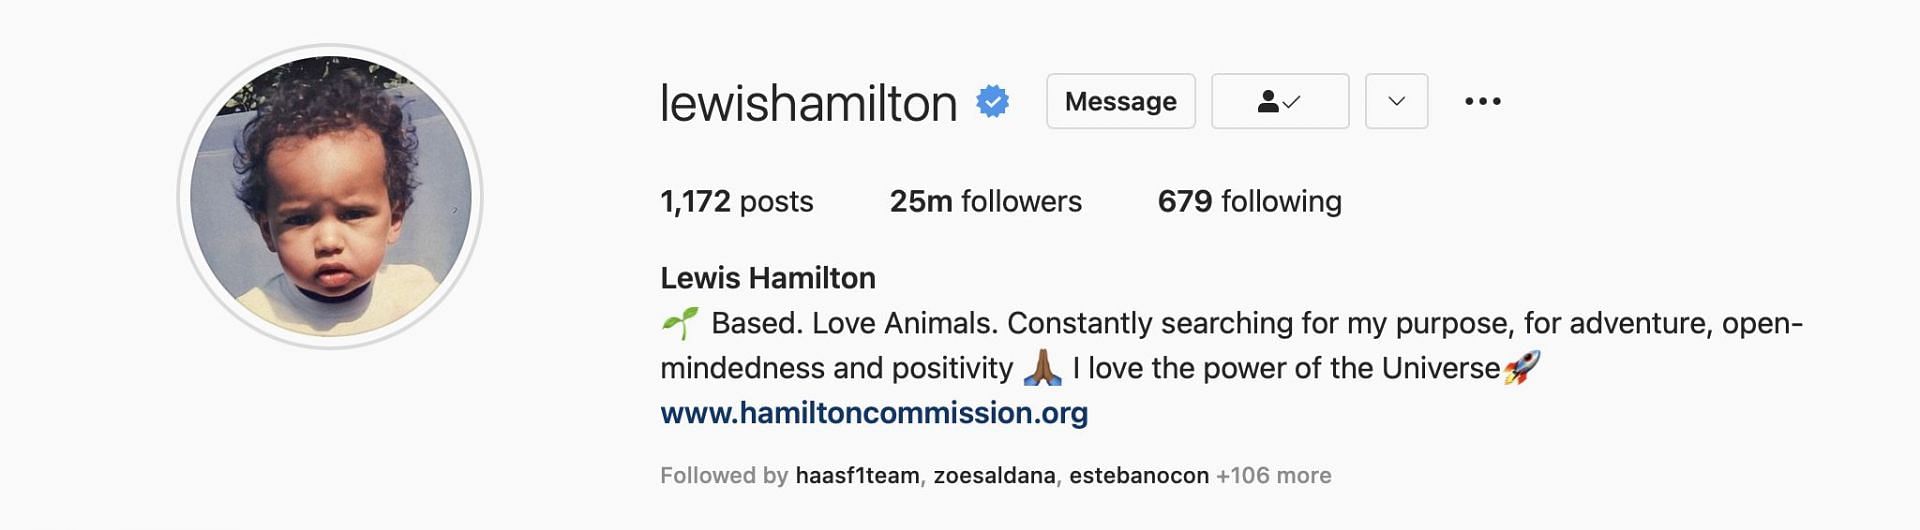 Lewis Hamilton has hit the 25 million mark for followers on Intagram